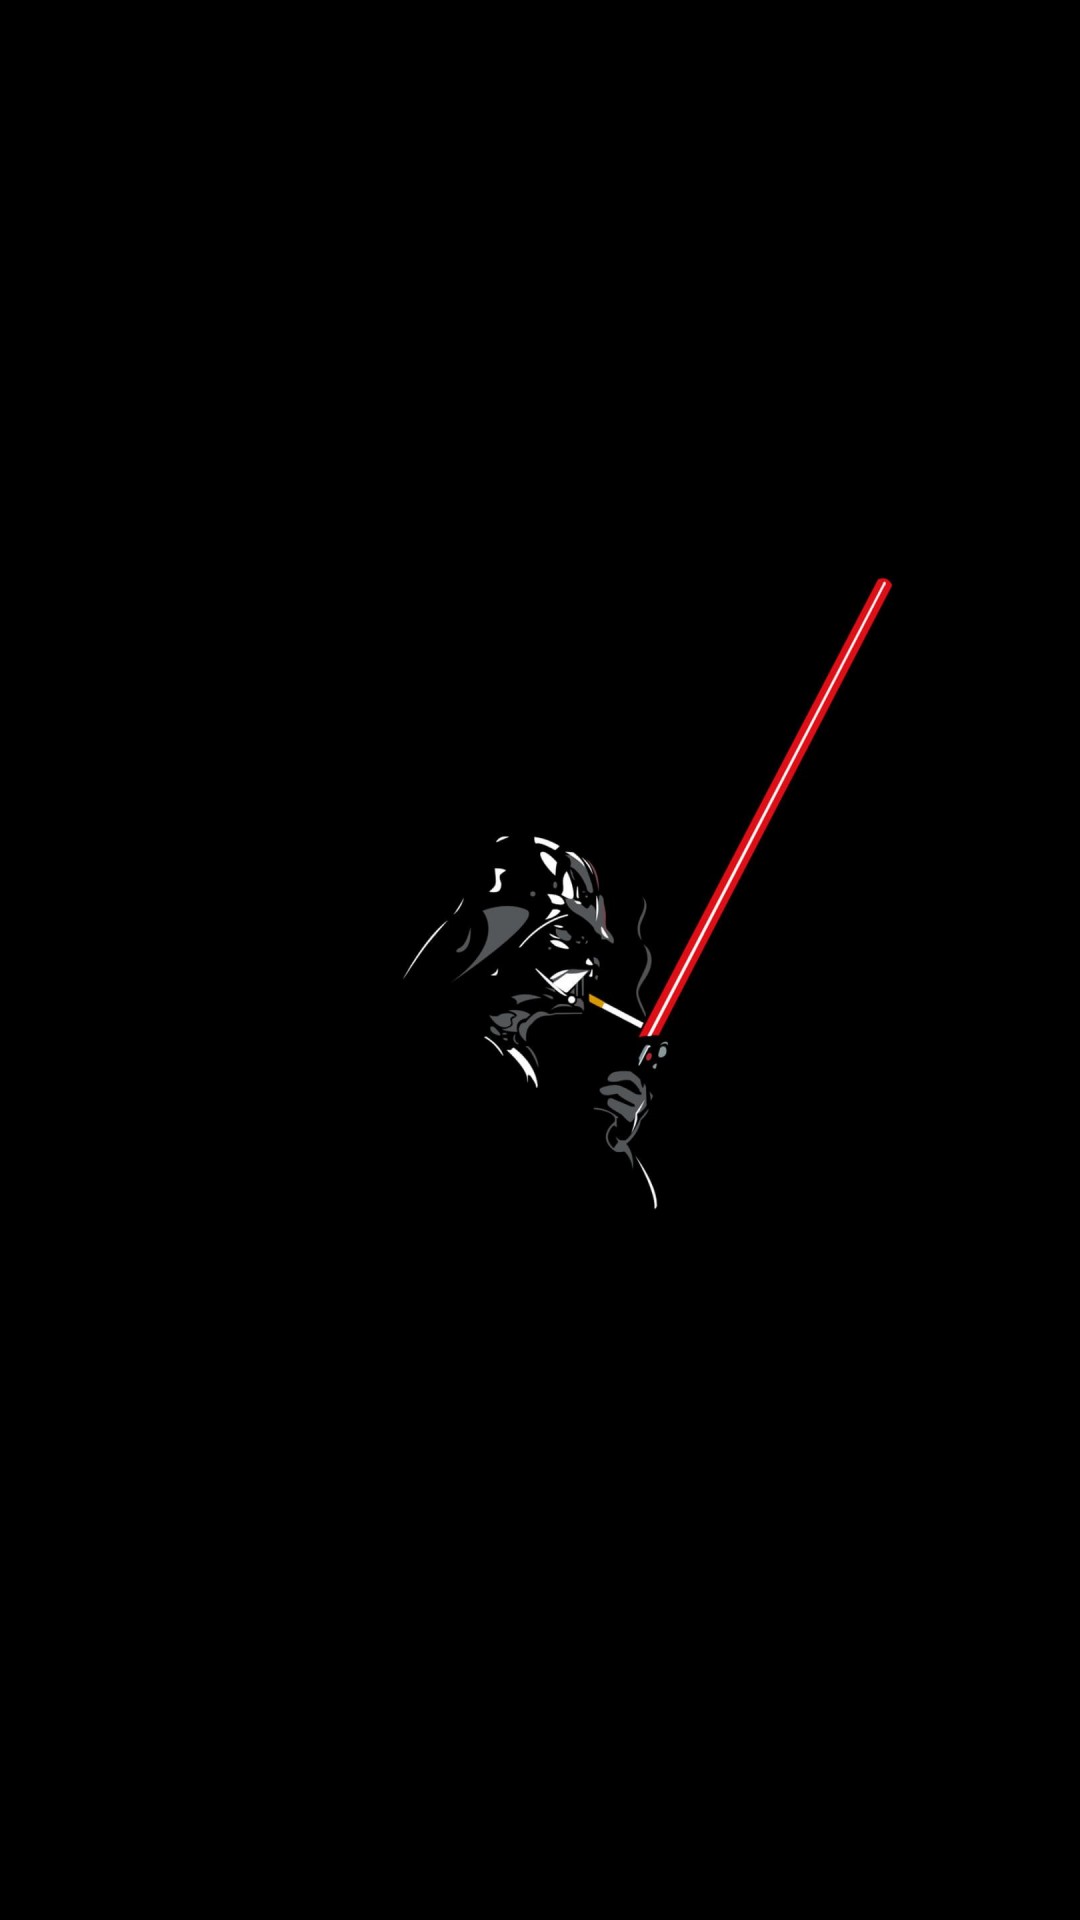 Darth Vader Lighting a Cigarette Wallpaper for SAMSUNG Galaxy S4